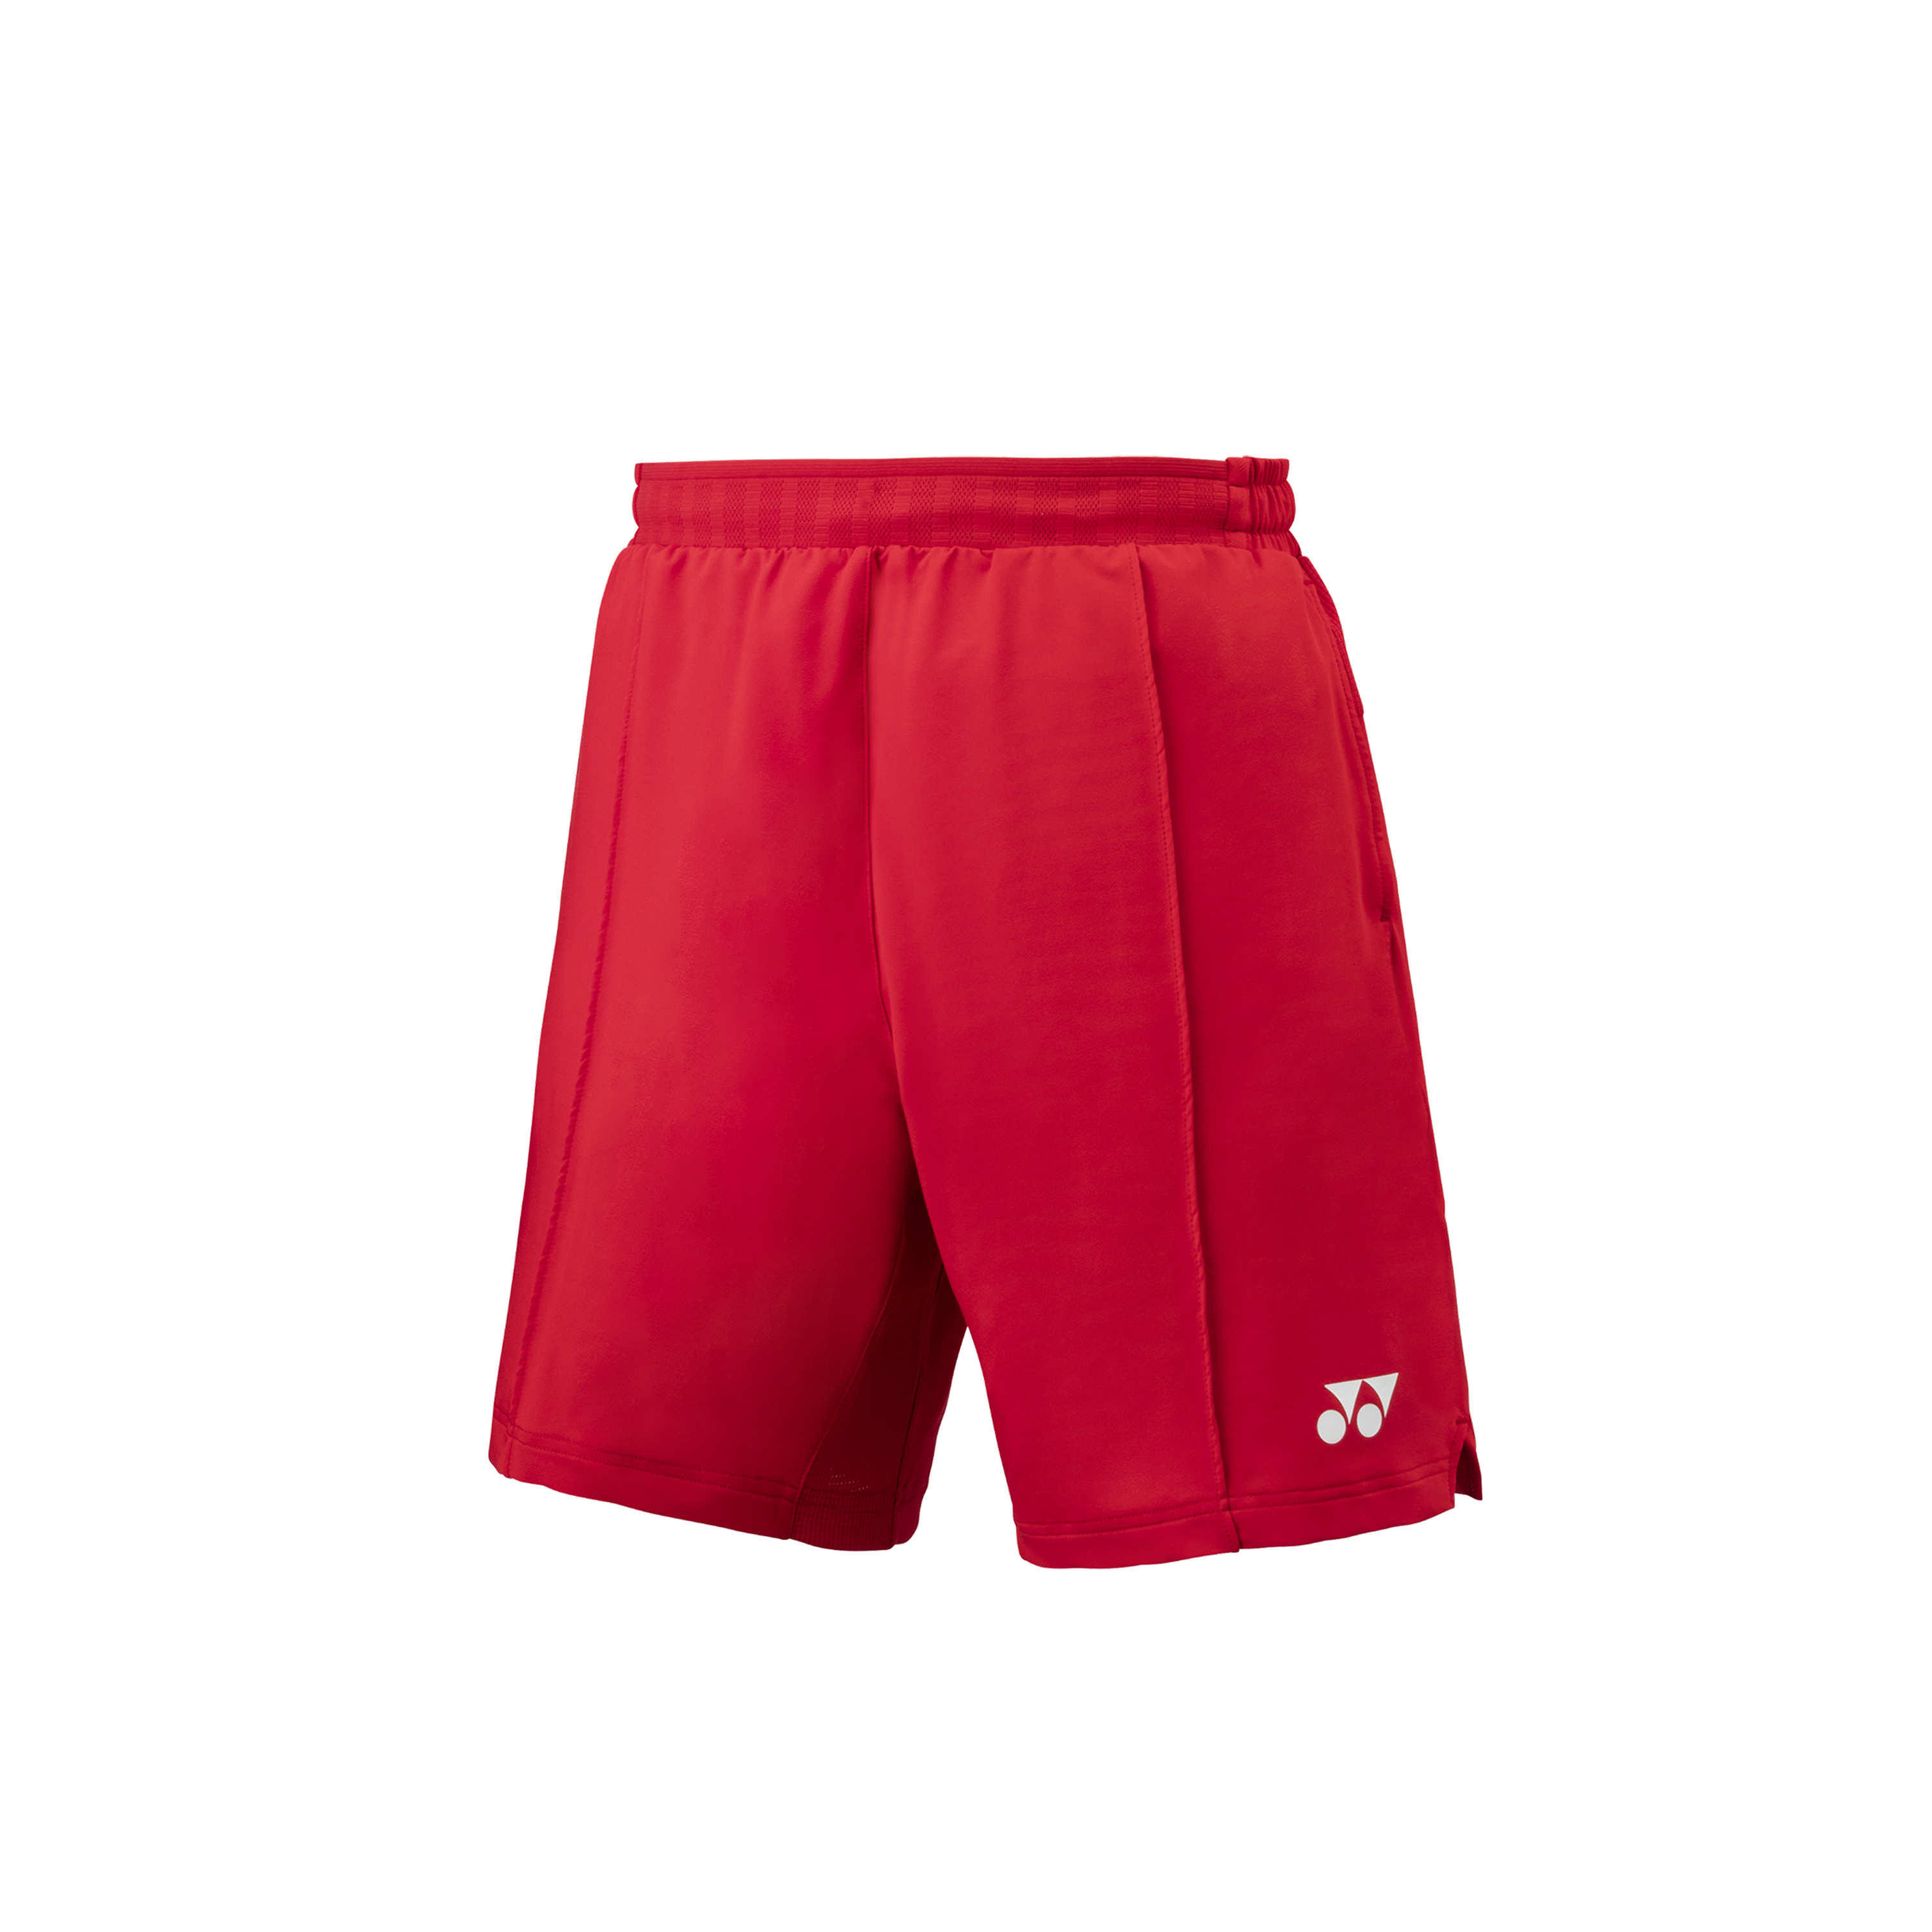 Yonex Premium Badminton/ Sports Shorts 15140 Ruby Red MEN'S